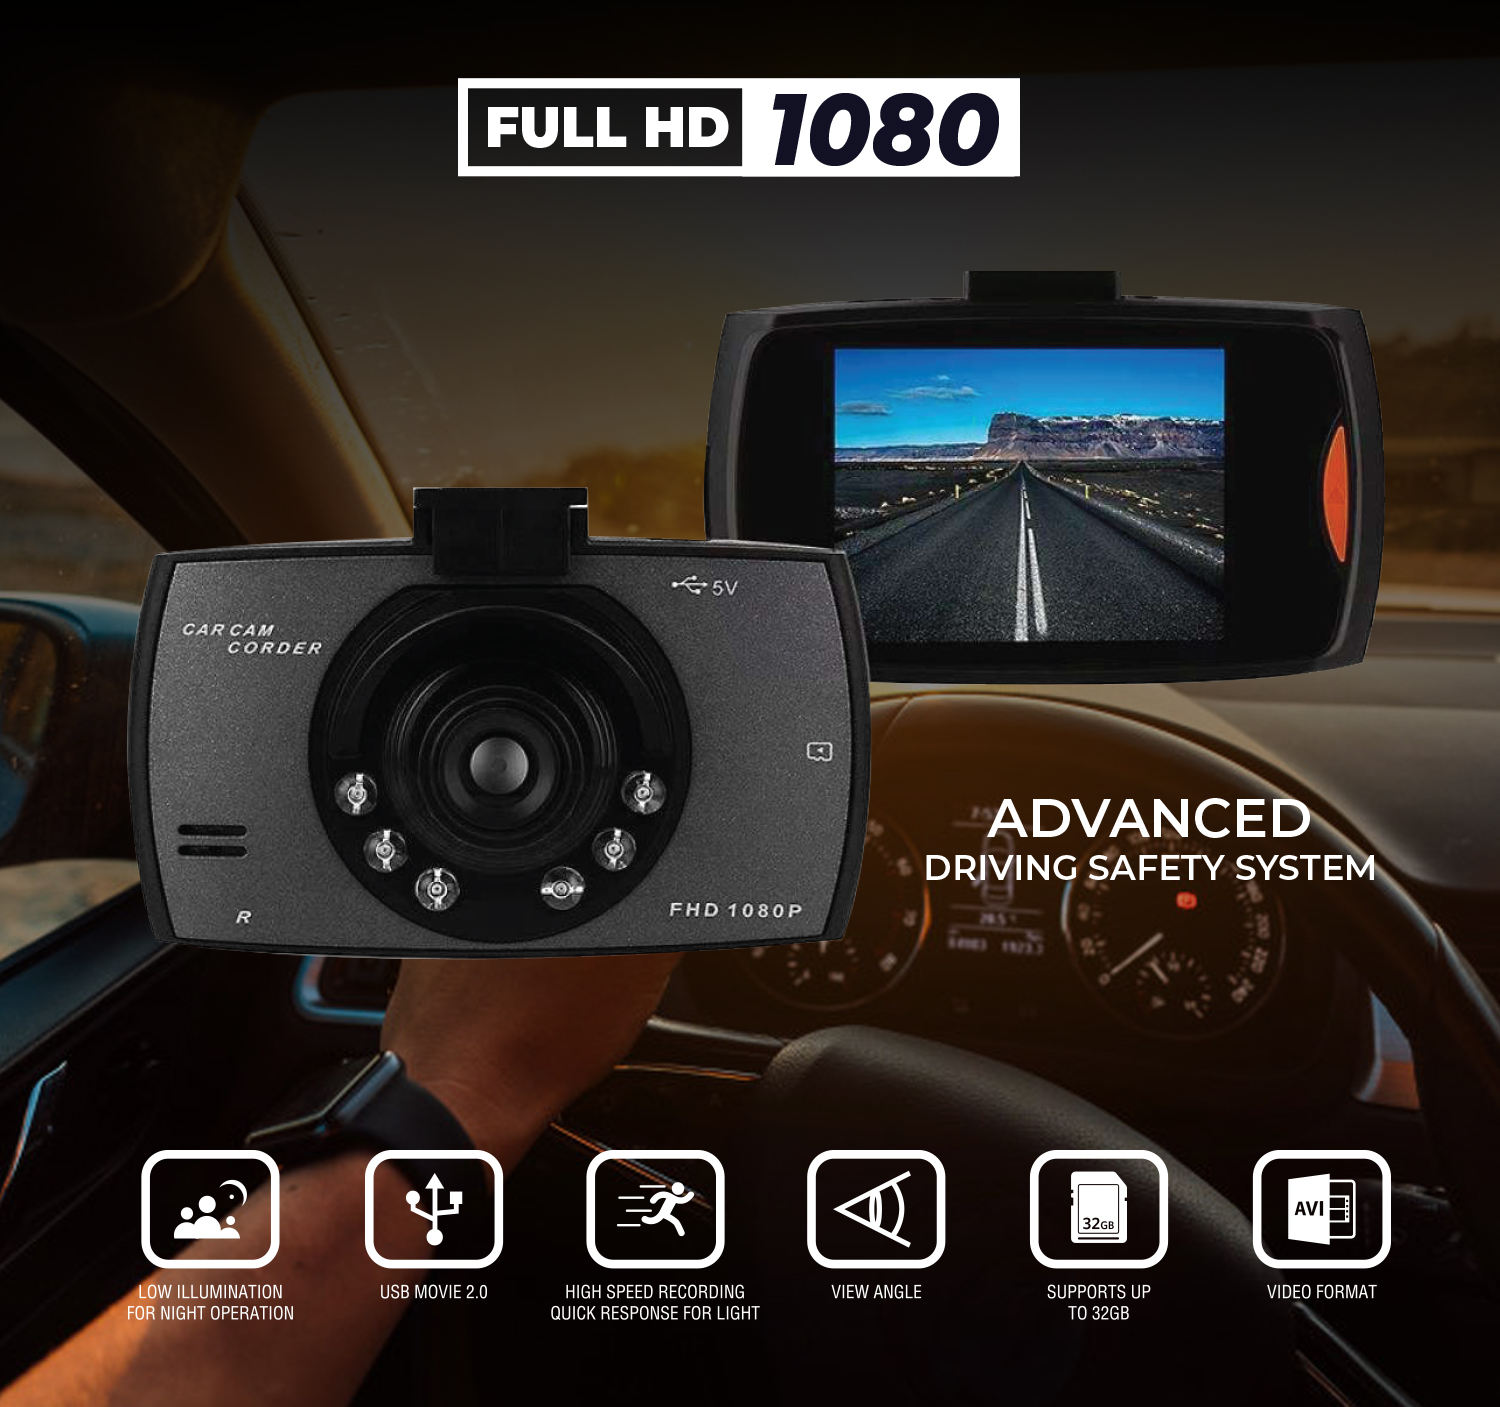 Apexview Dash Cam - Top-Rated Dual Dashboard Camera